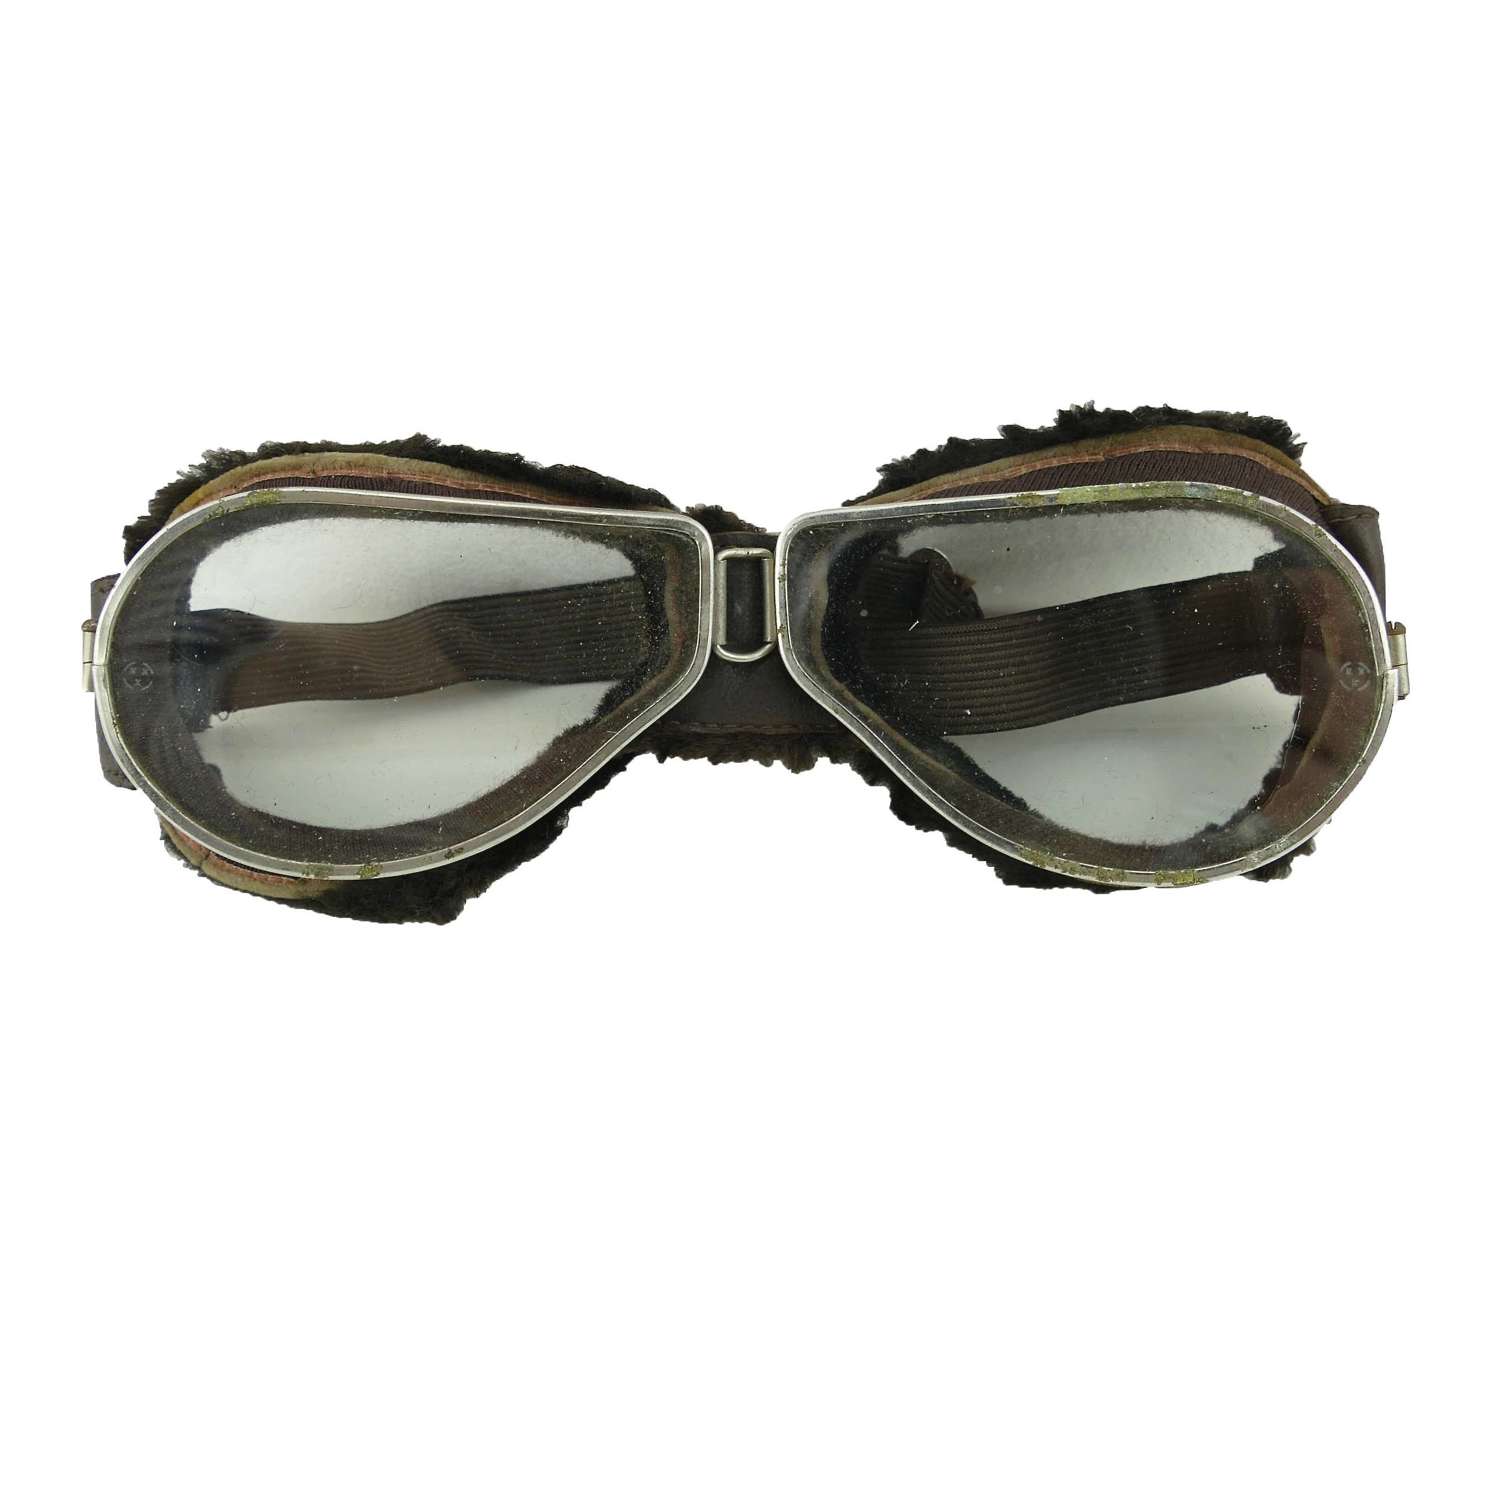 RAF used Lewis aviation goggles